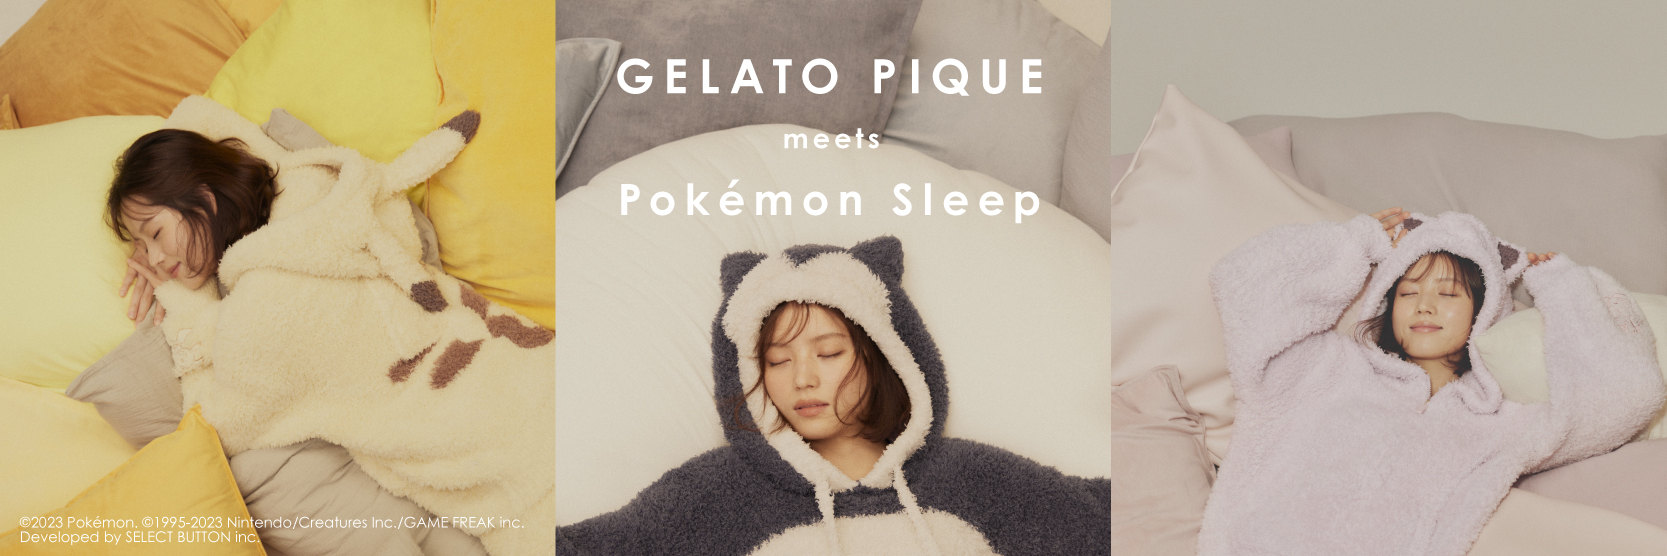 Pokémon Sleep」×「ジェラート ピケ」コラボアイテムを9月28日に発売 